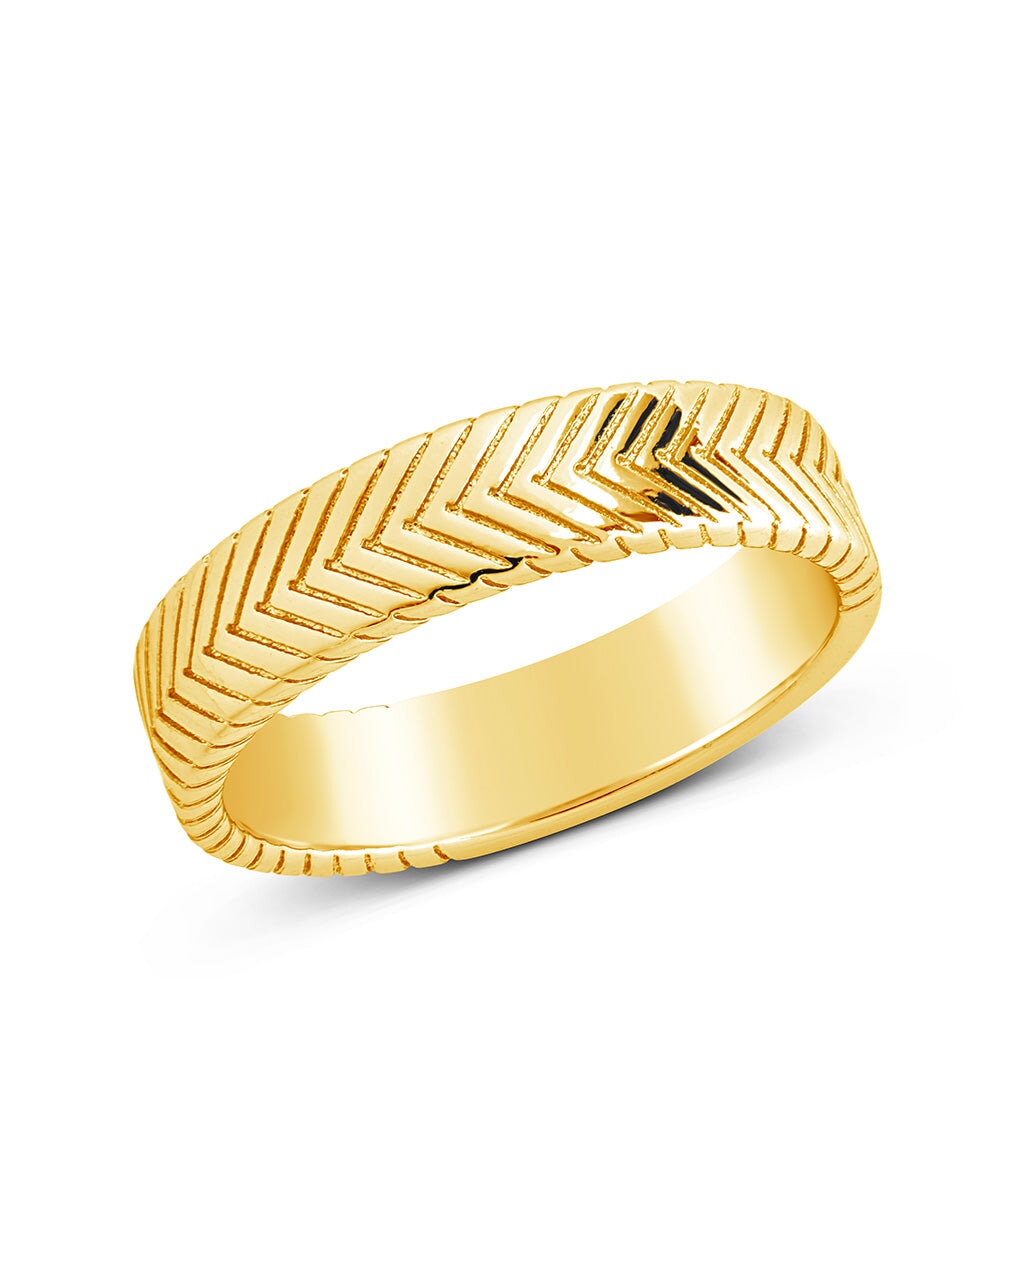 Jeanne Ring Ring Sterling Forever Gold 6 